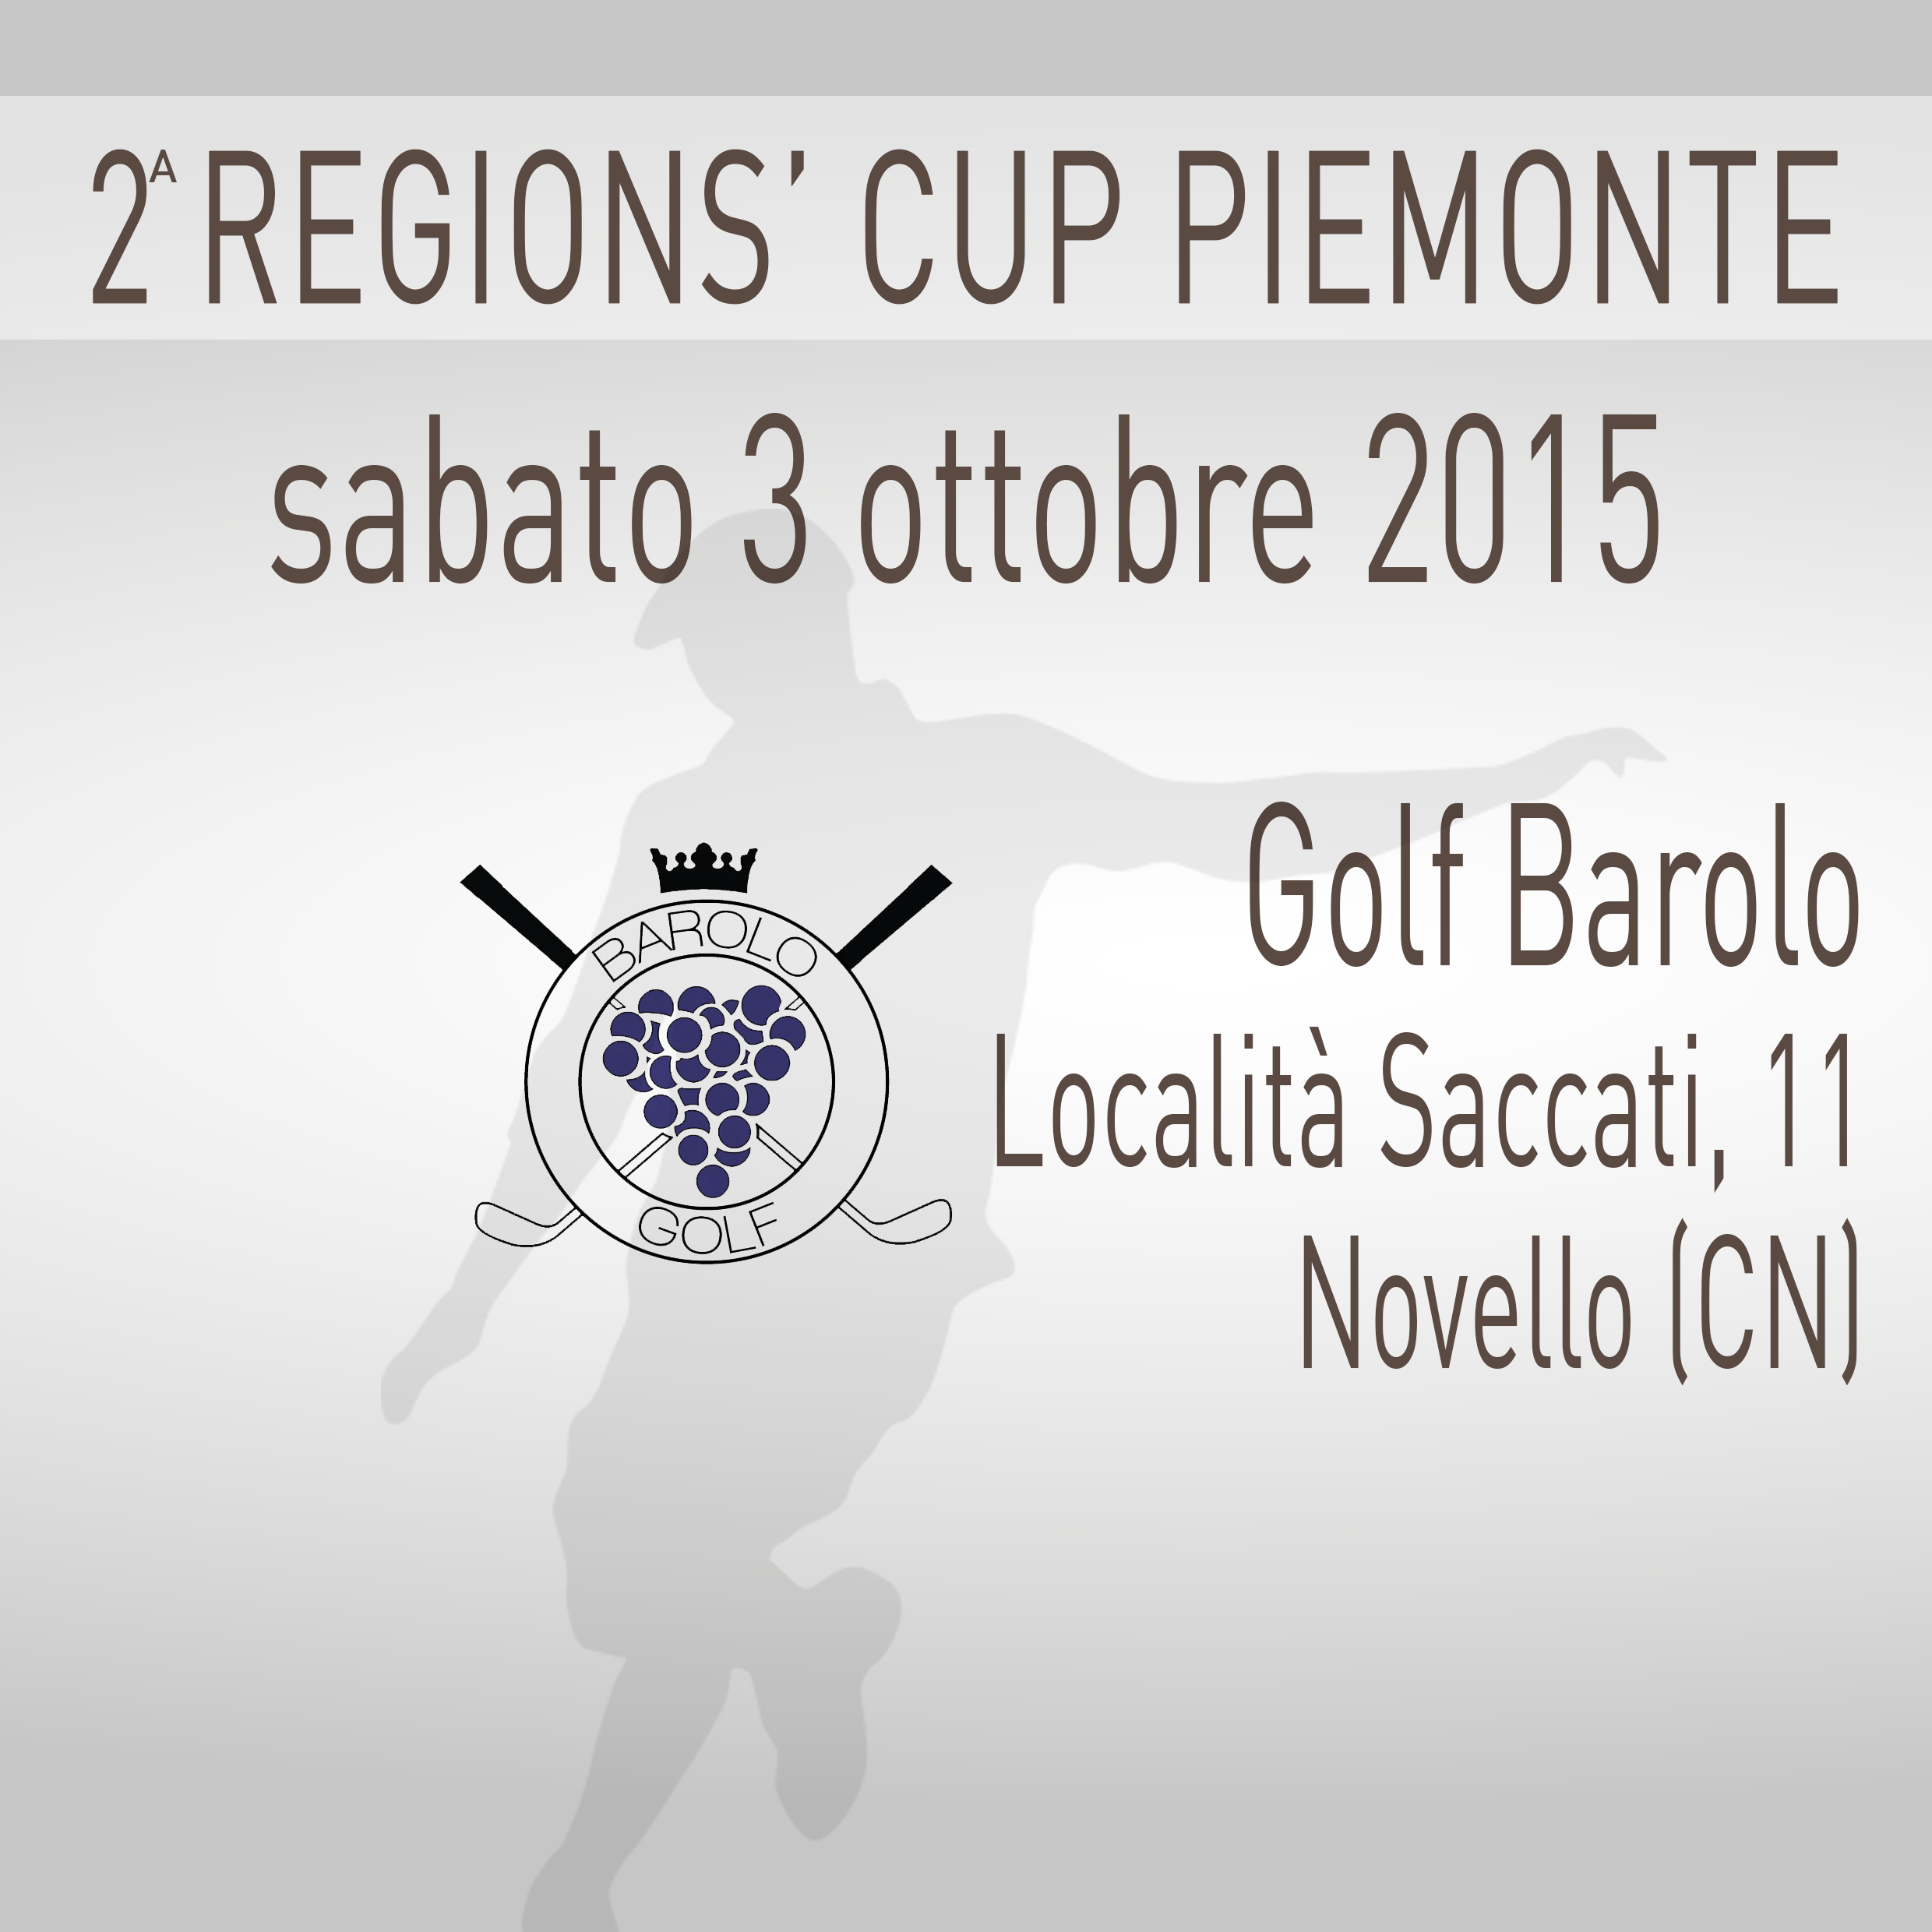 Locandina 2 tappa Regions' Cup Footgolf Piemonte 2015:2016 Novello CN sabato 3 ottobre 2015 Negozio